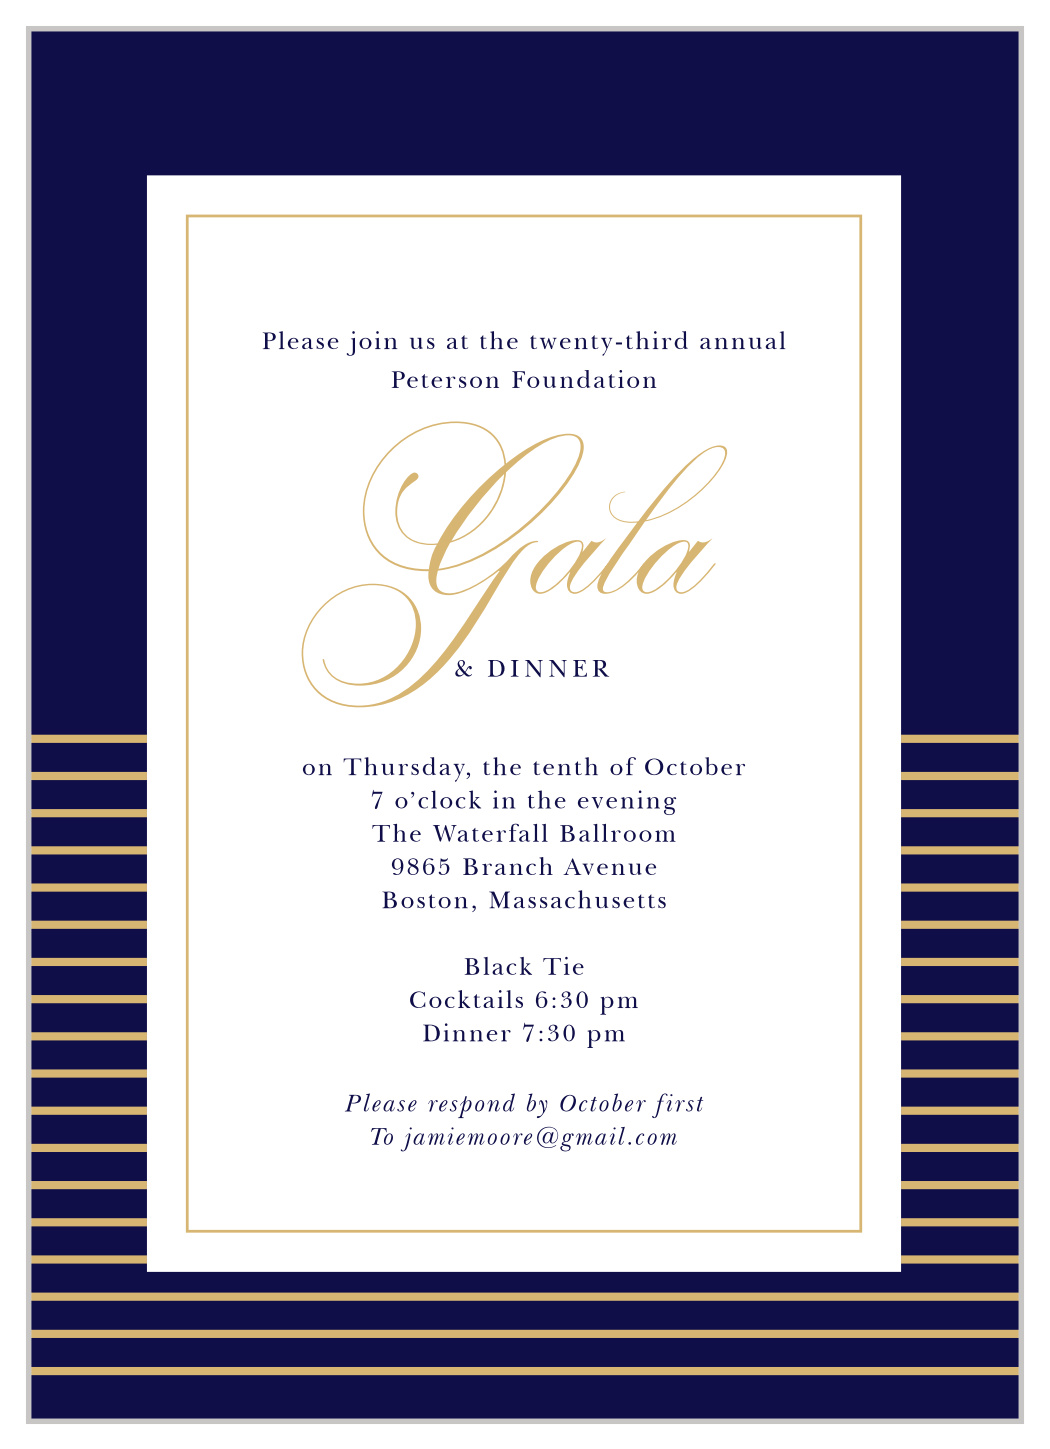 Royal Jewel Gala Invitations